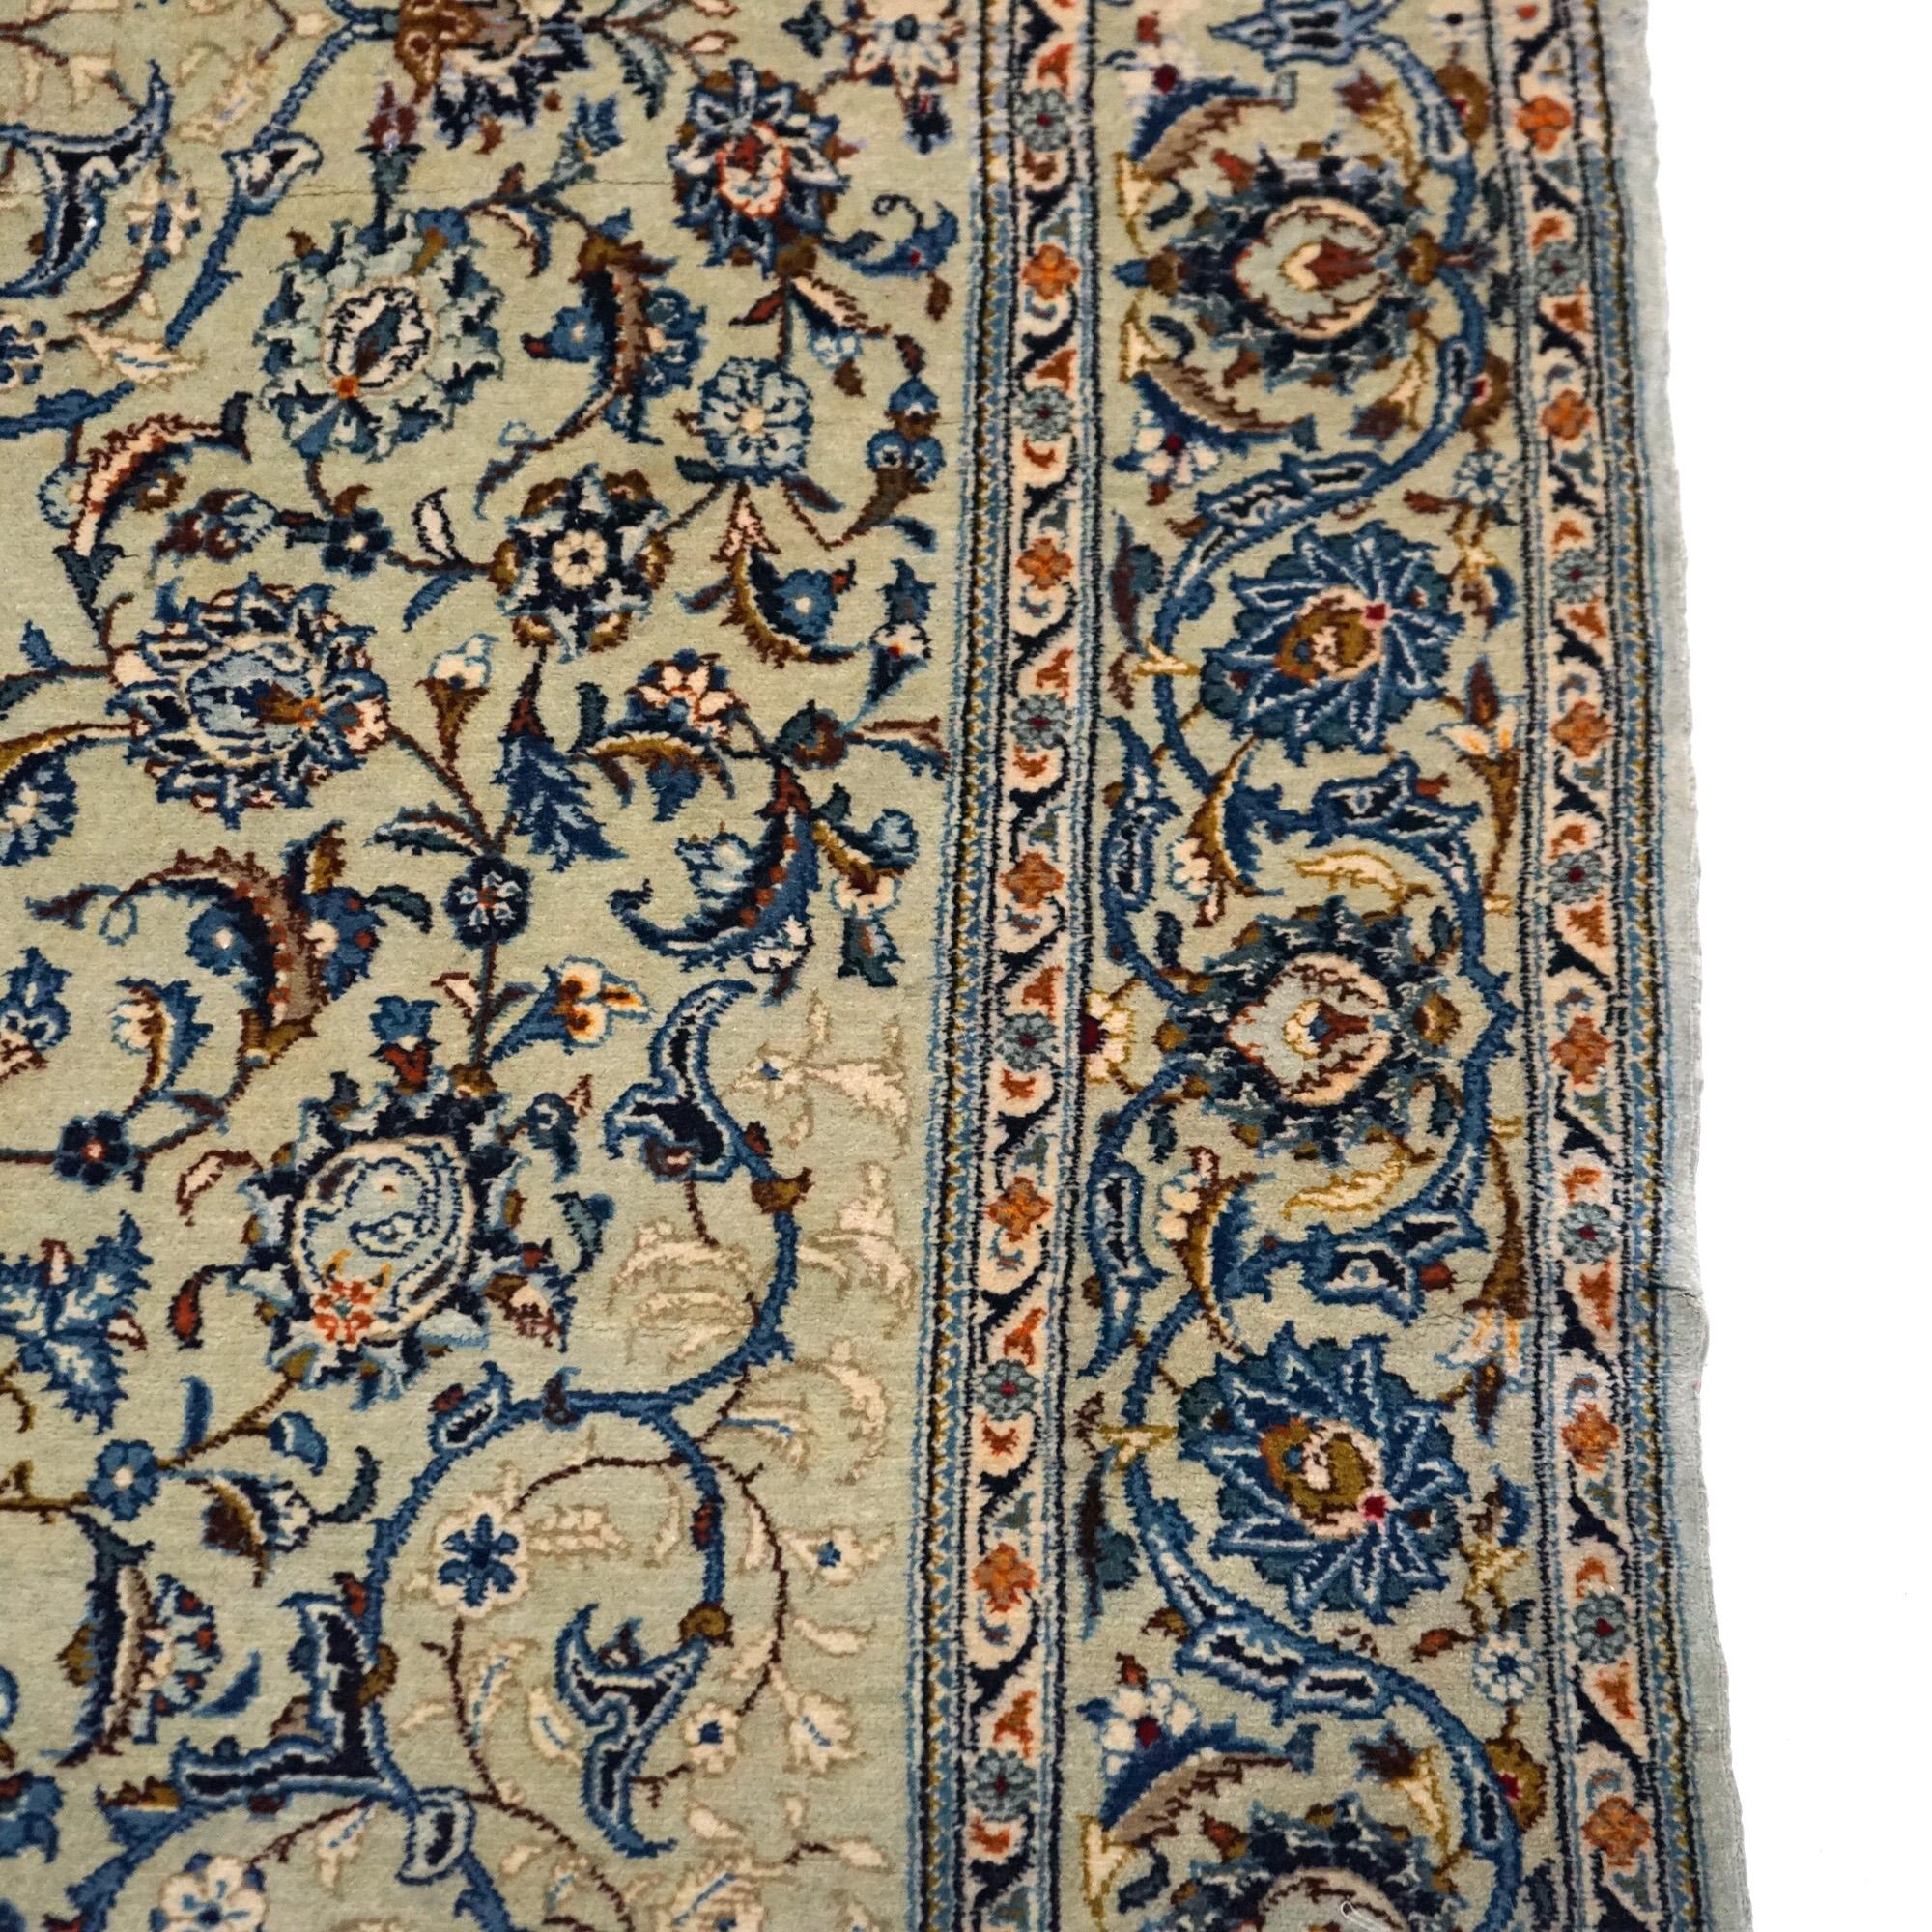 Antique Tabriz Oriental Wool Rug with Allover Floral Garden Design Circa 1940 For Sale 6